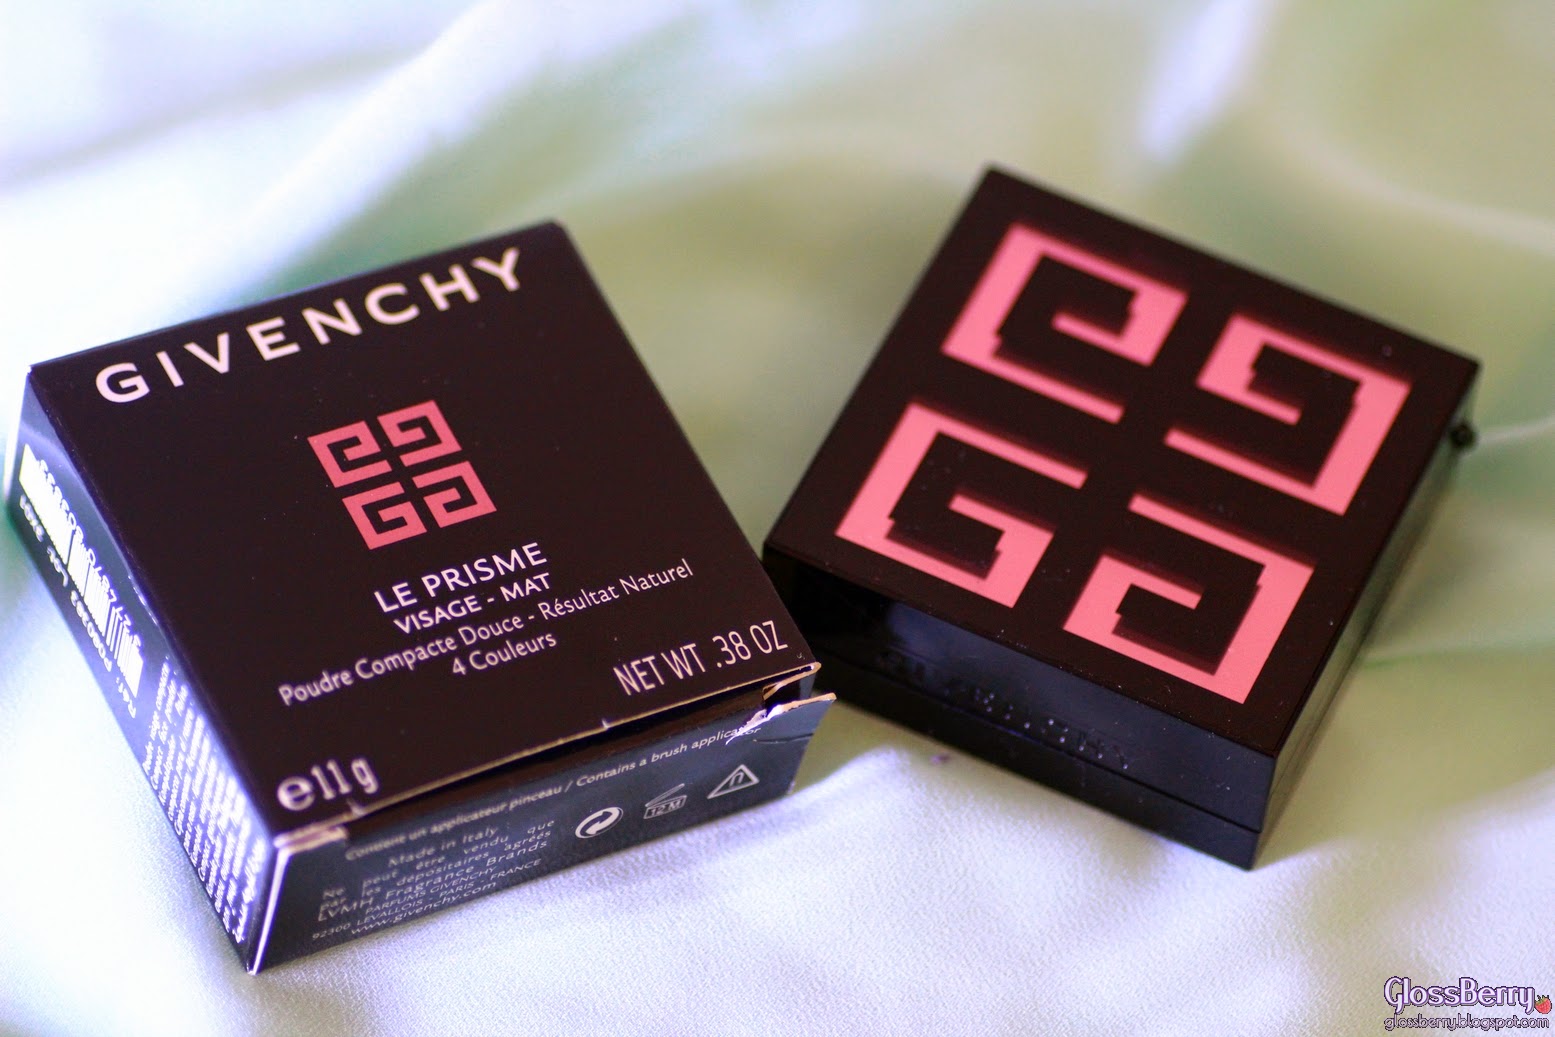  Givenchy - Le Prisme Visage Mat Soft Compact Face Powder review swatches 83 peach פודרה ג'יבנשי גיבנשי סקירה בלוג איפור וטיפוח המלצות עור יבש גלוסברי